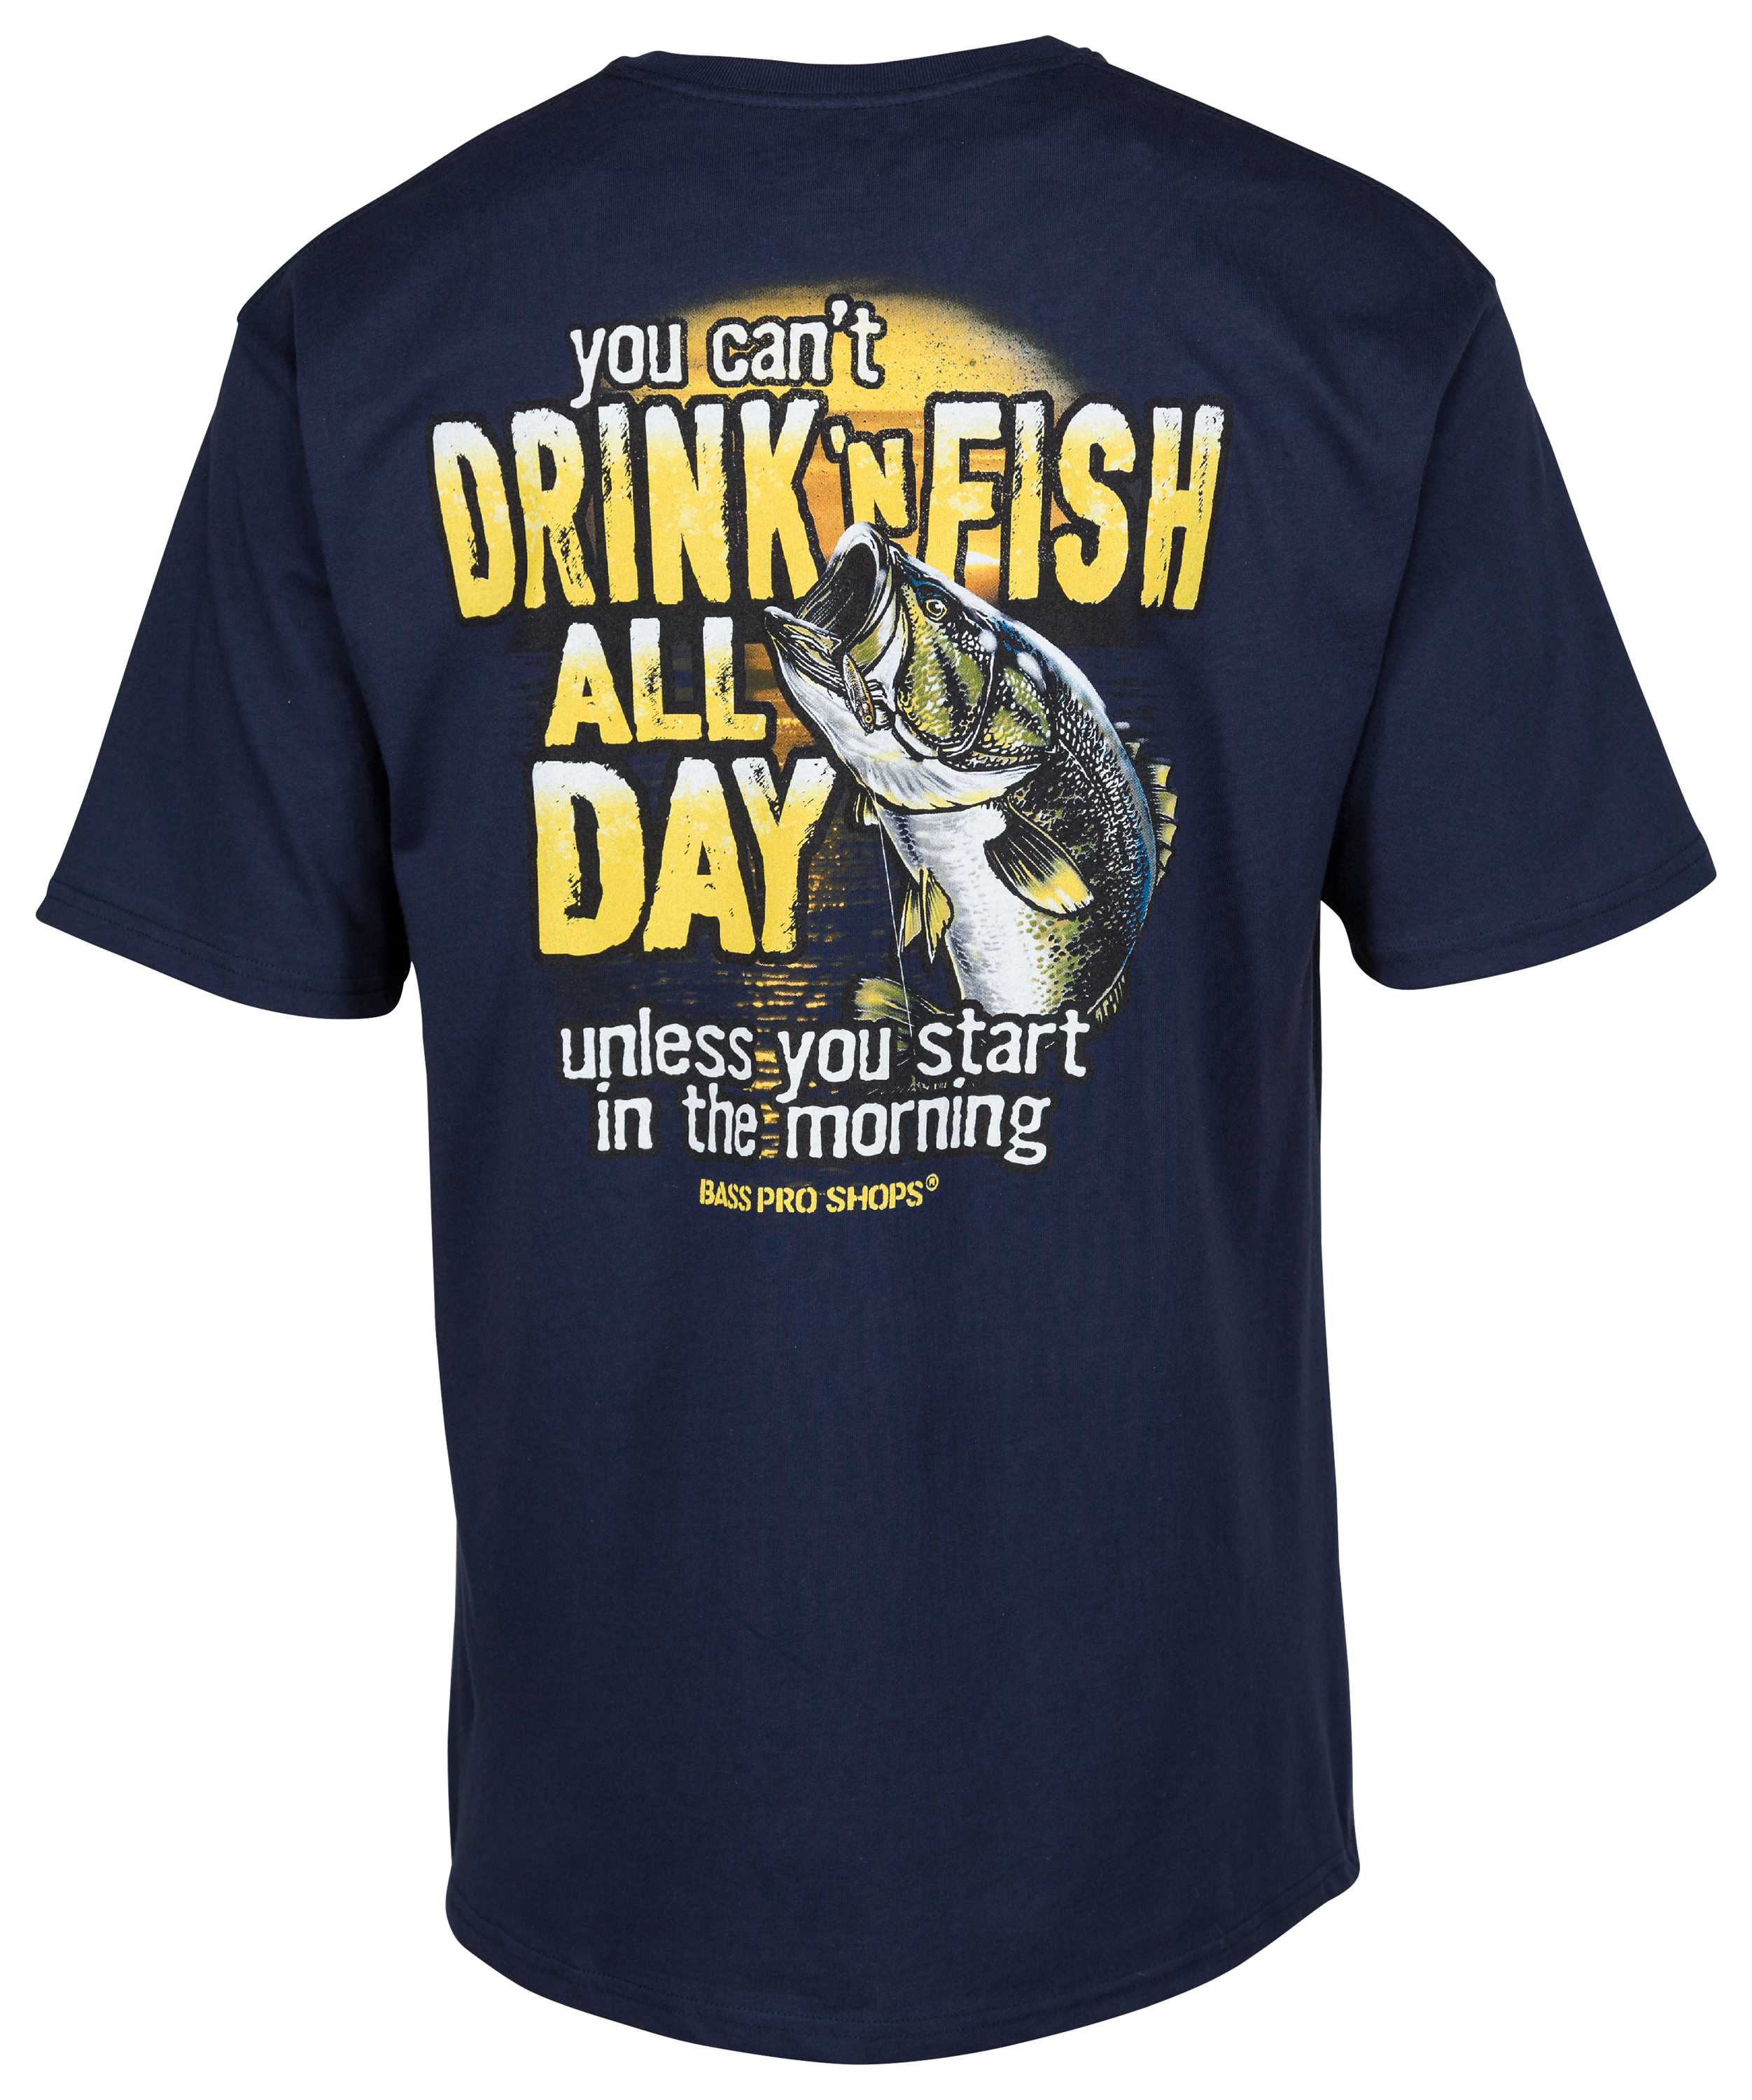 Bass Pro Shops Drink 'N Fish T-Shirt for Men